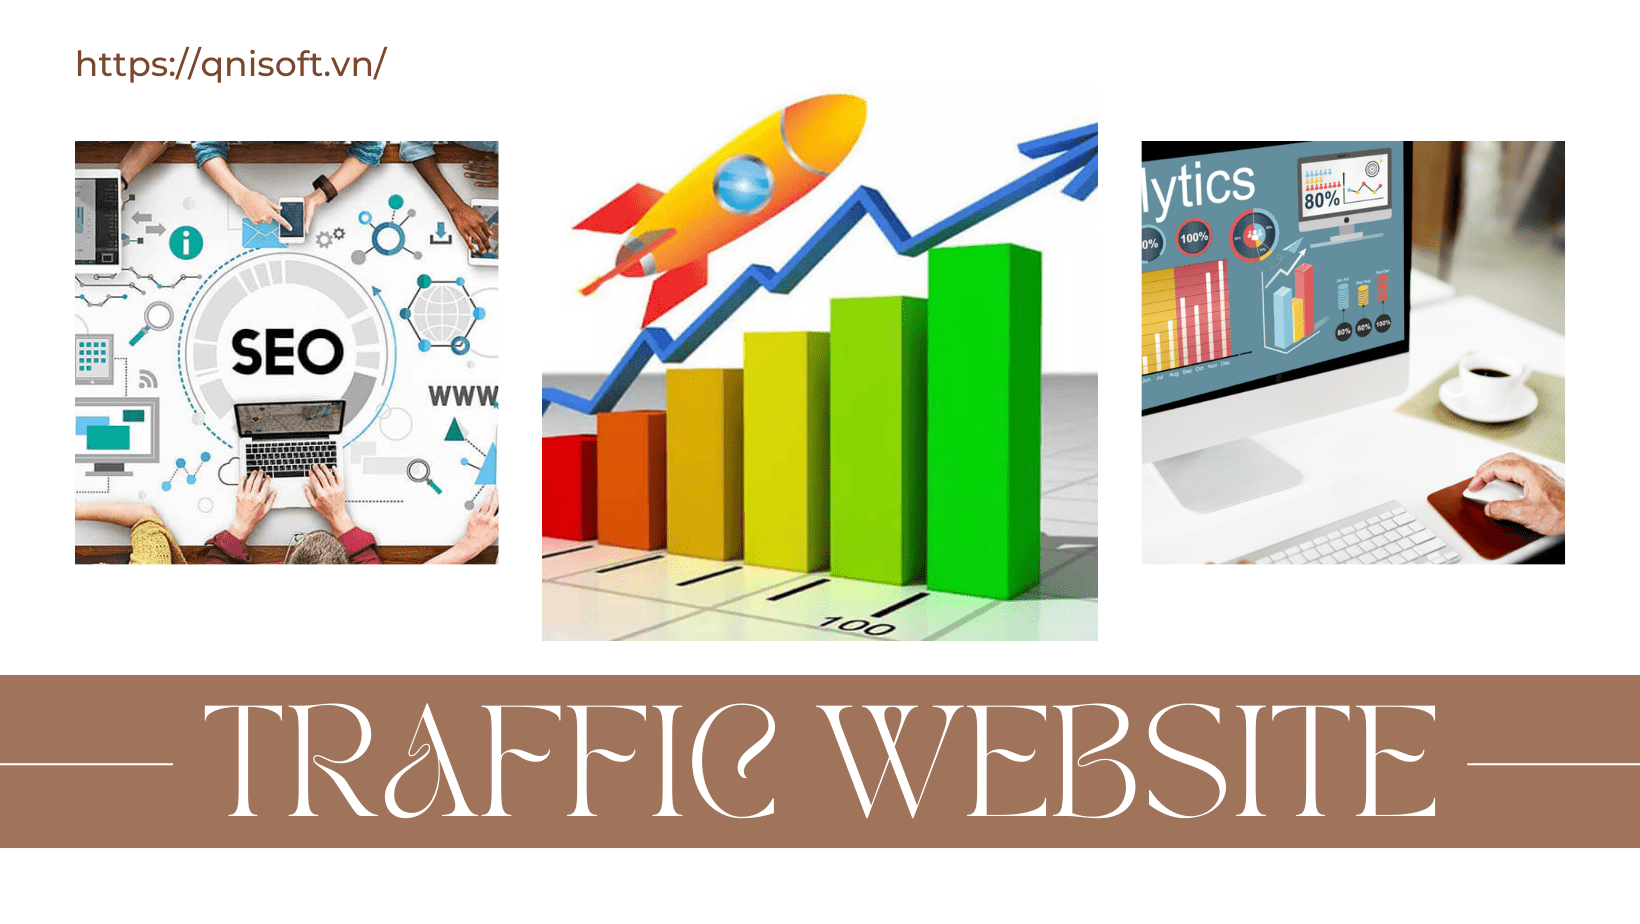 Traffic website - Dịch vụ traffic website